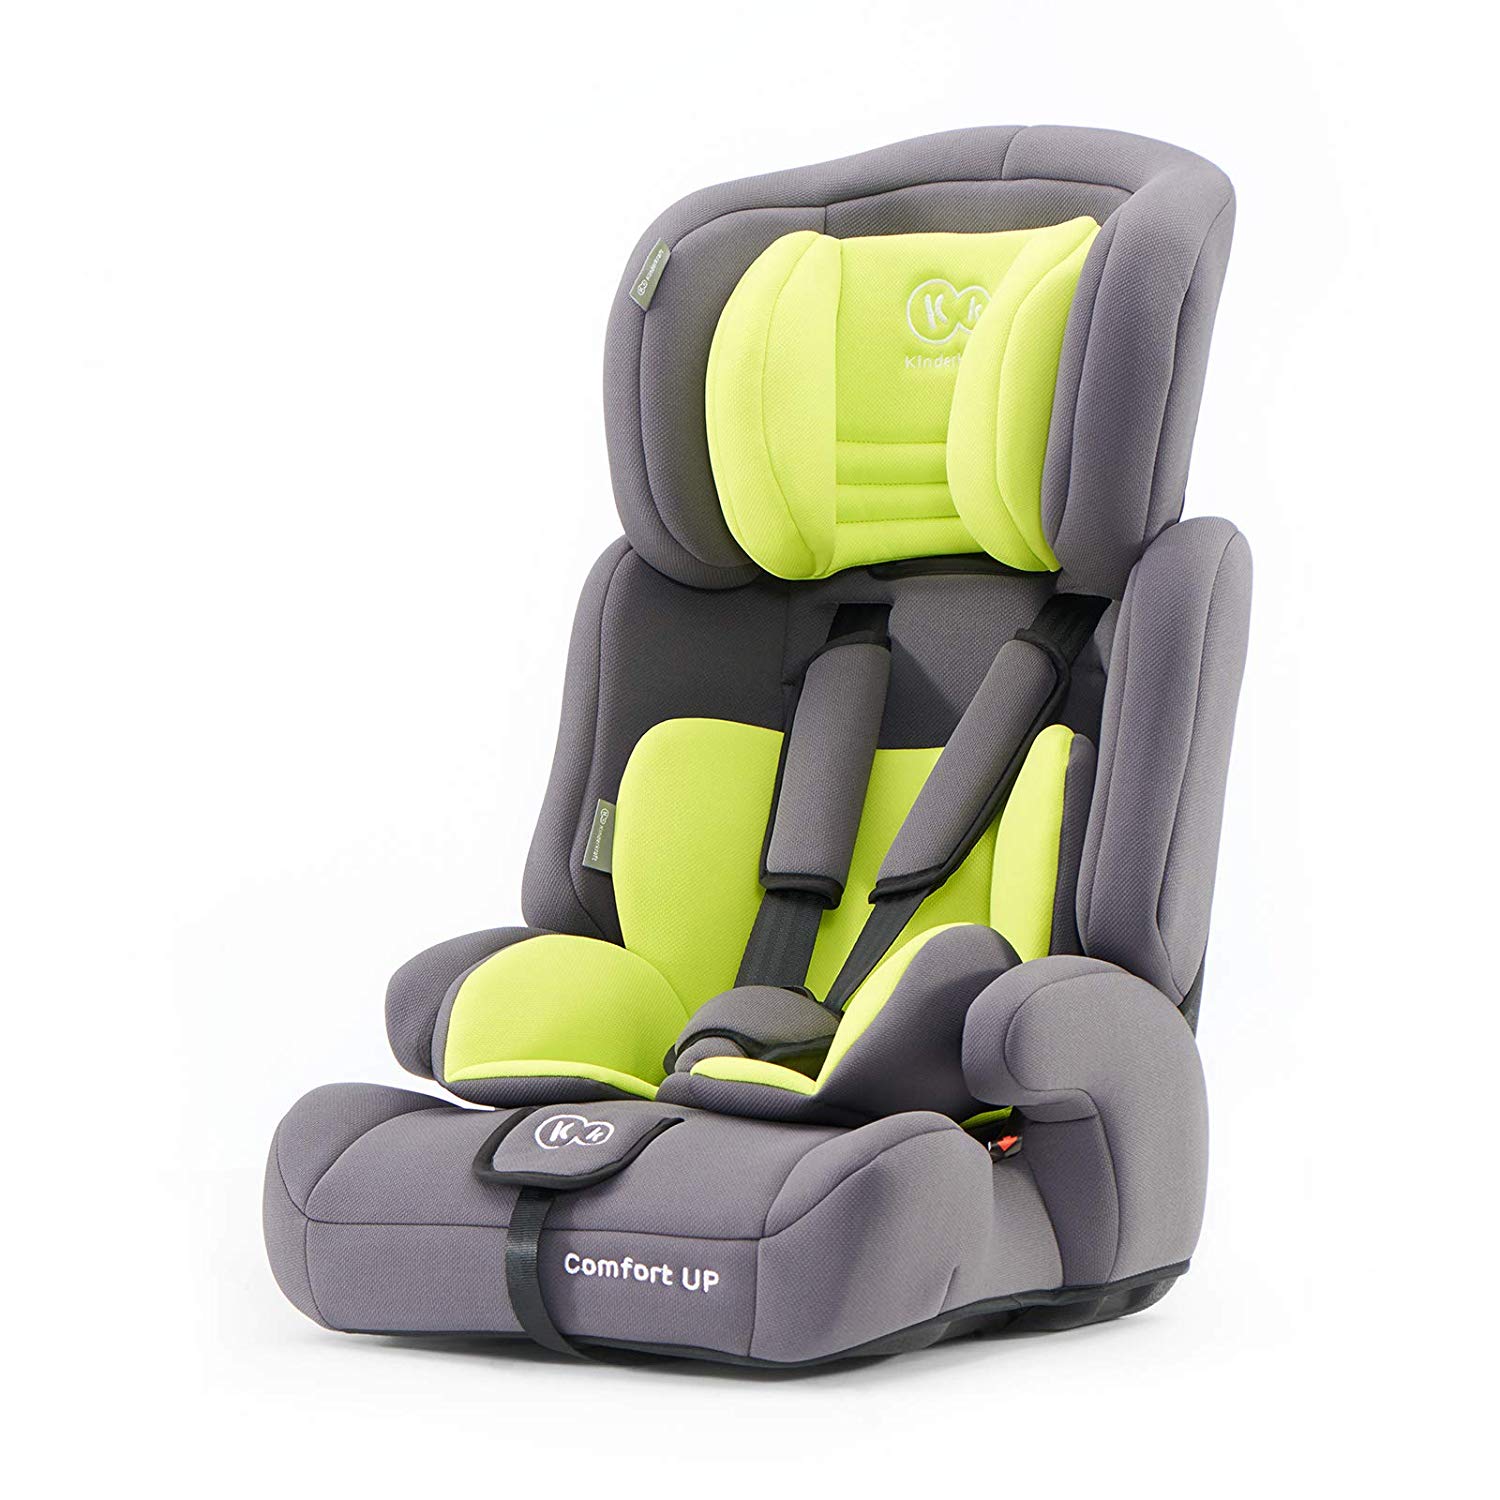 Kinderkraft Comfort Up Child’S Car Seat - For Children Weighing 9 - 36 Kg, 